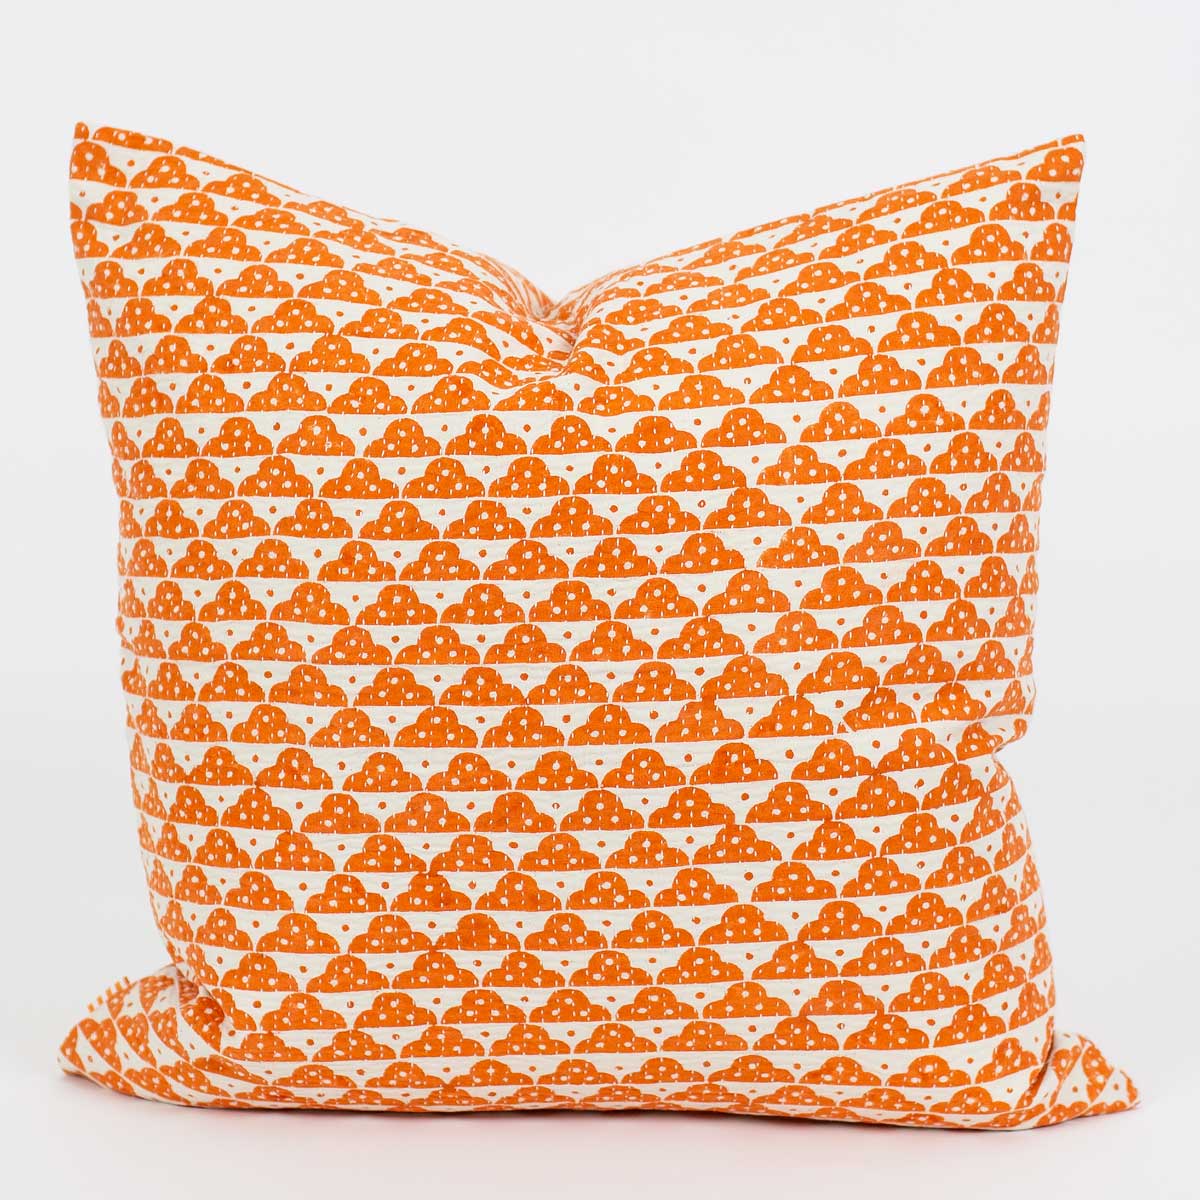 THREE HILLS Cushion cover 50x50, orange